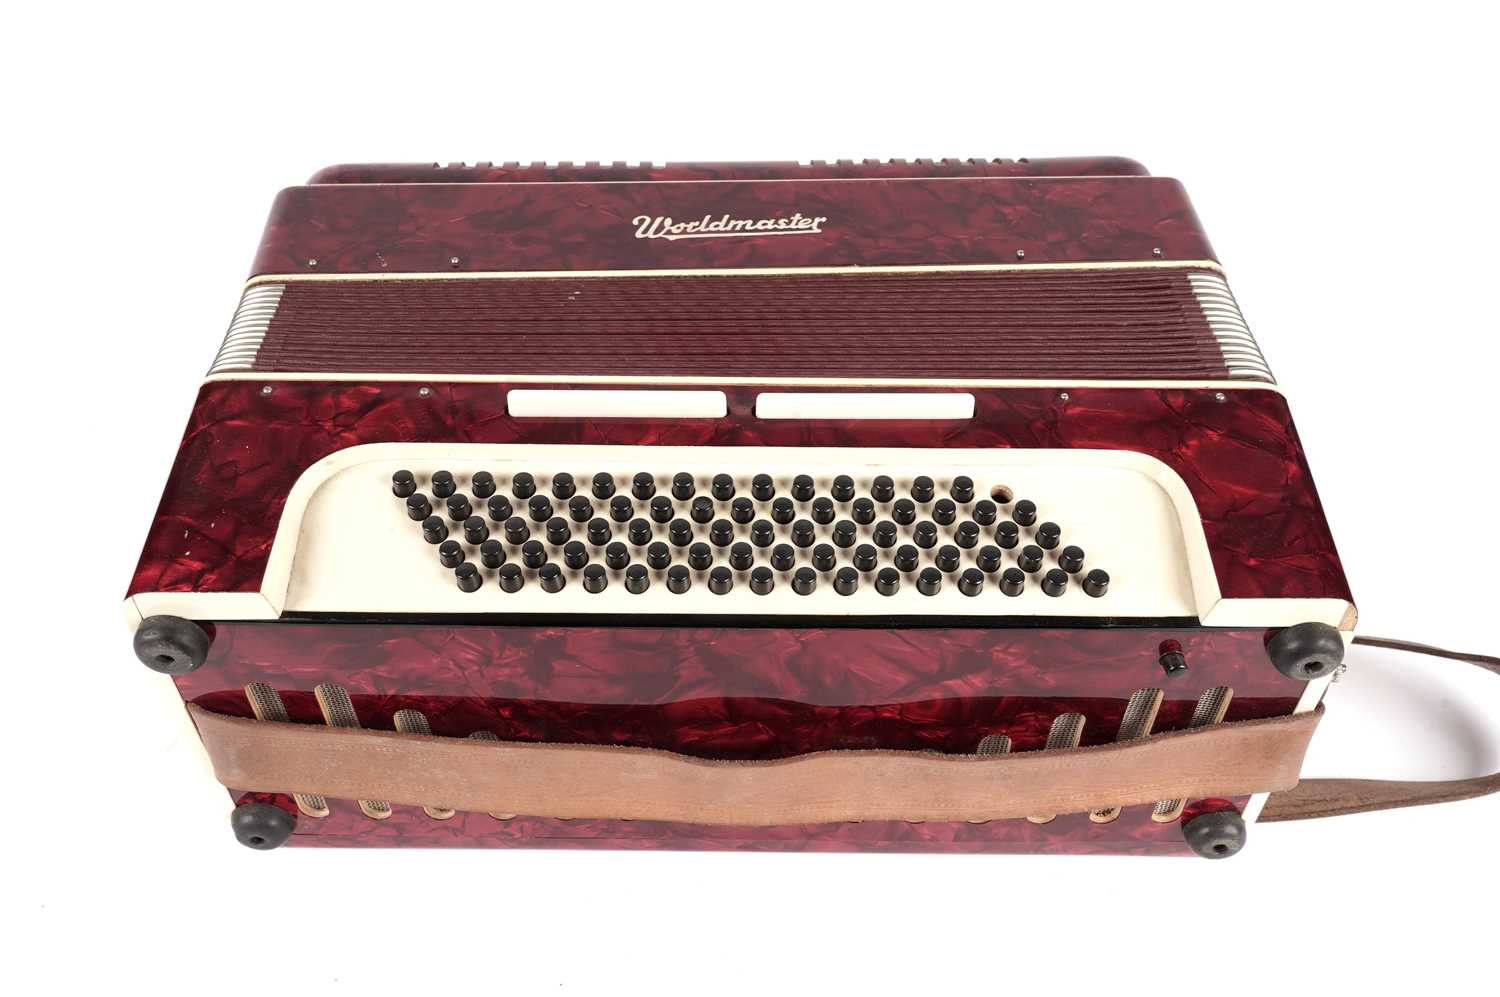 A WorldMaster accordion - Image 10 of 11